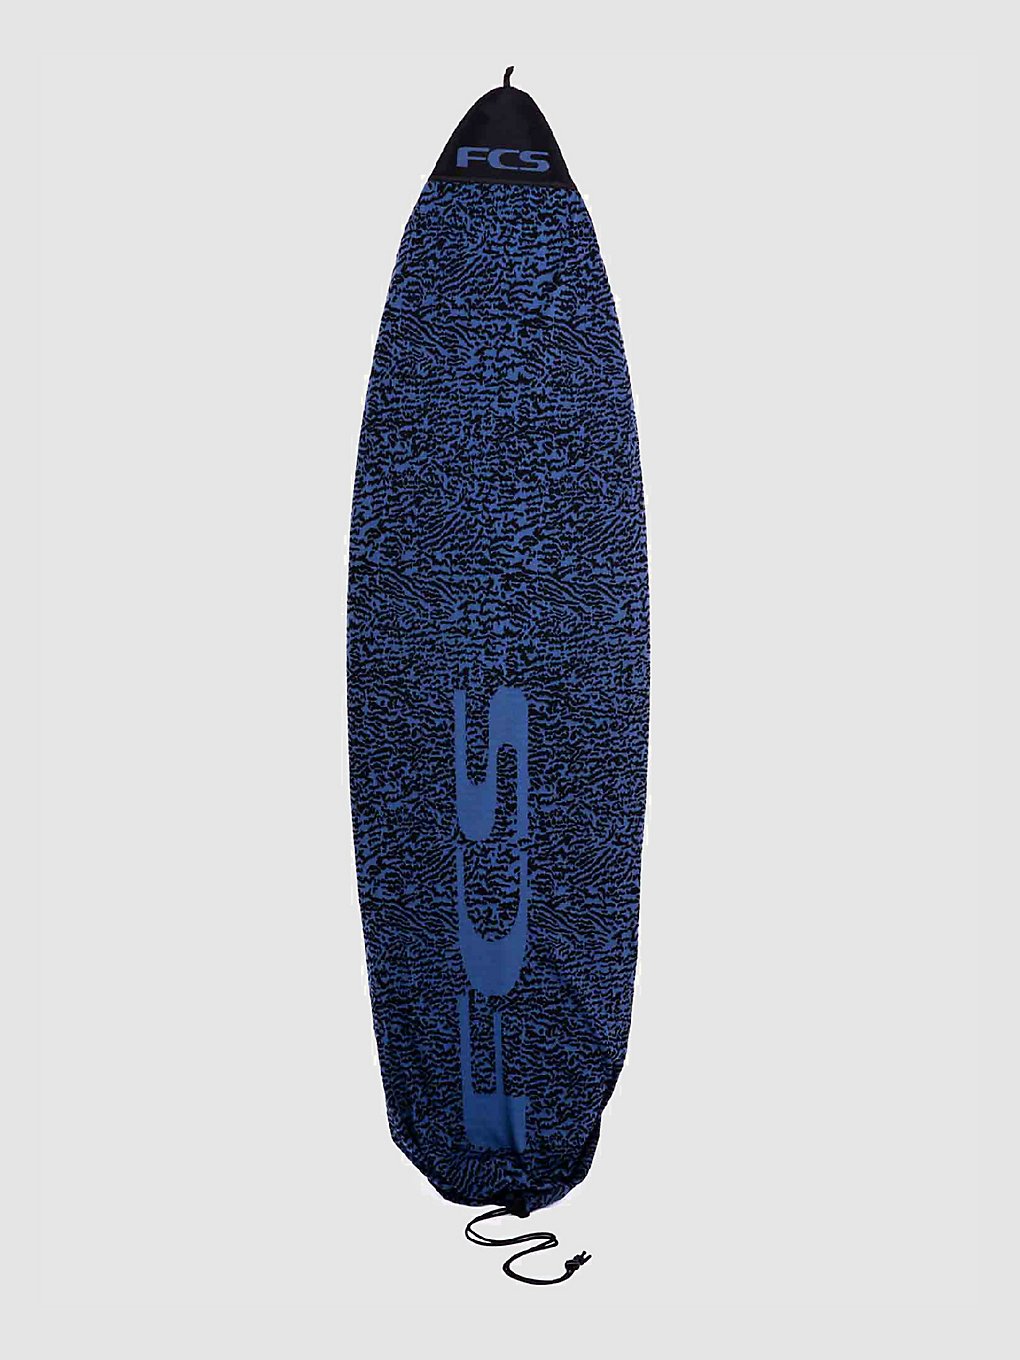 FCS Stretch Fun Board 6'3" Surfboard-Tasche stone blue kaufen